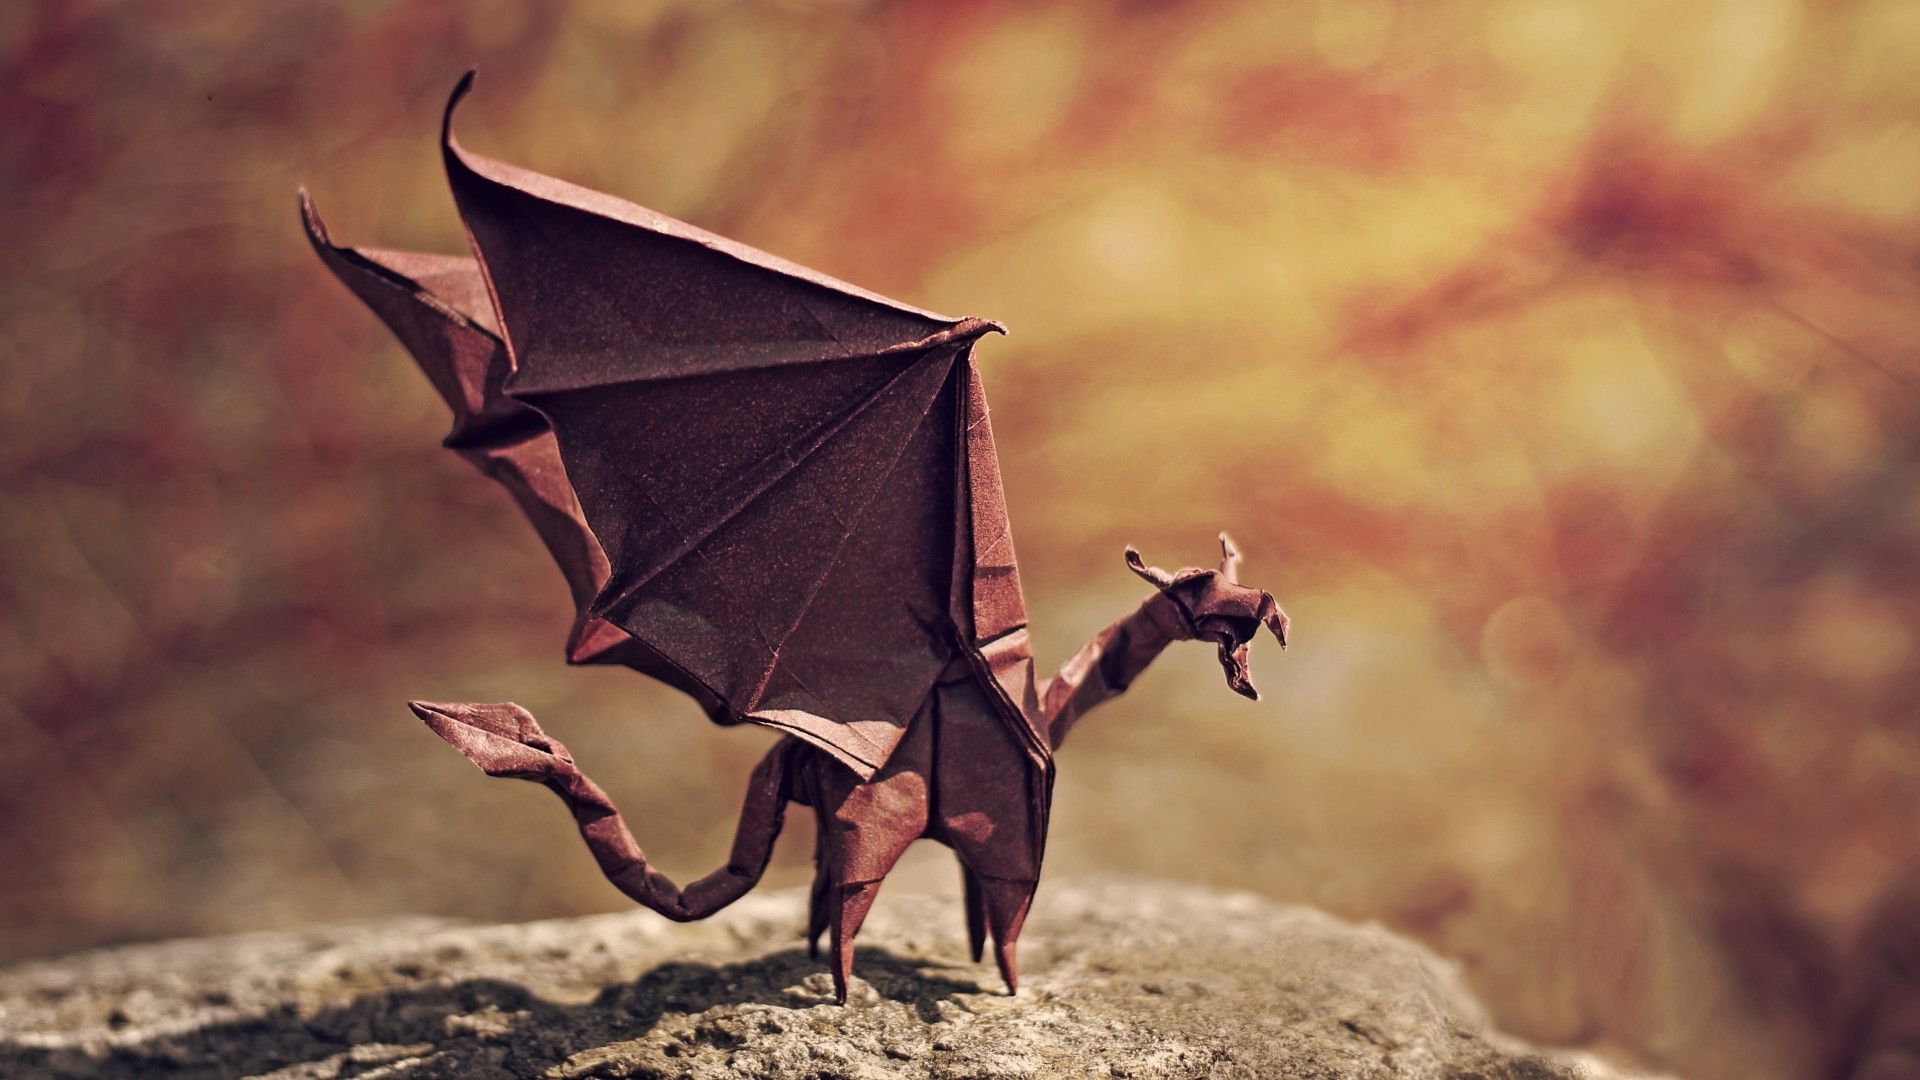 General 1920x1080 dragon origami wings stones tail depth of field paper shadow miniatures creature DeviantArt closeup